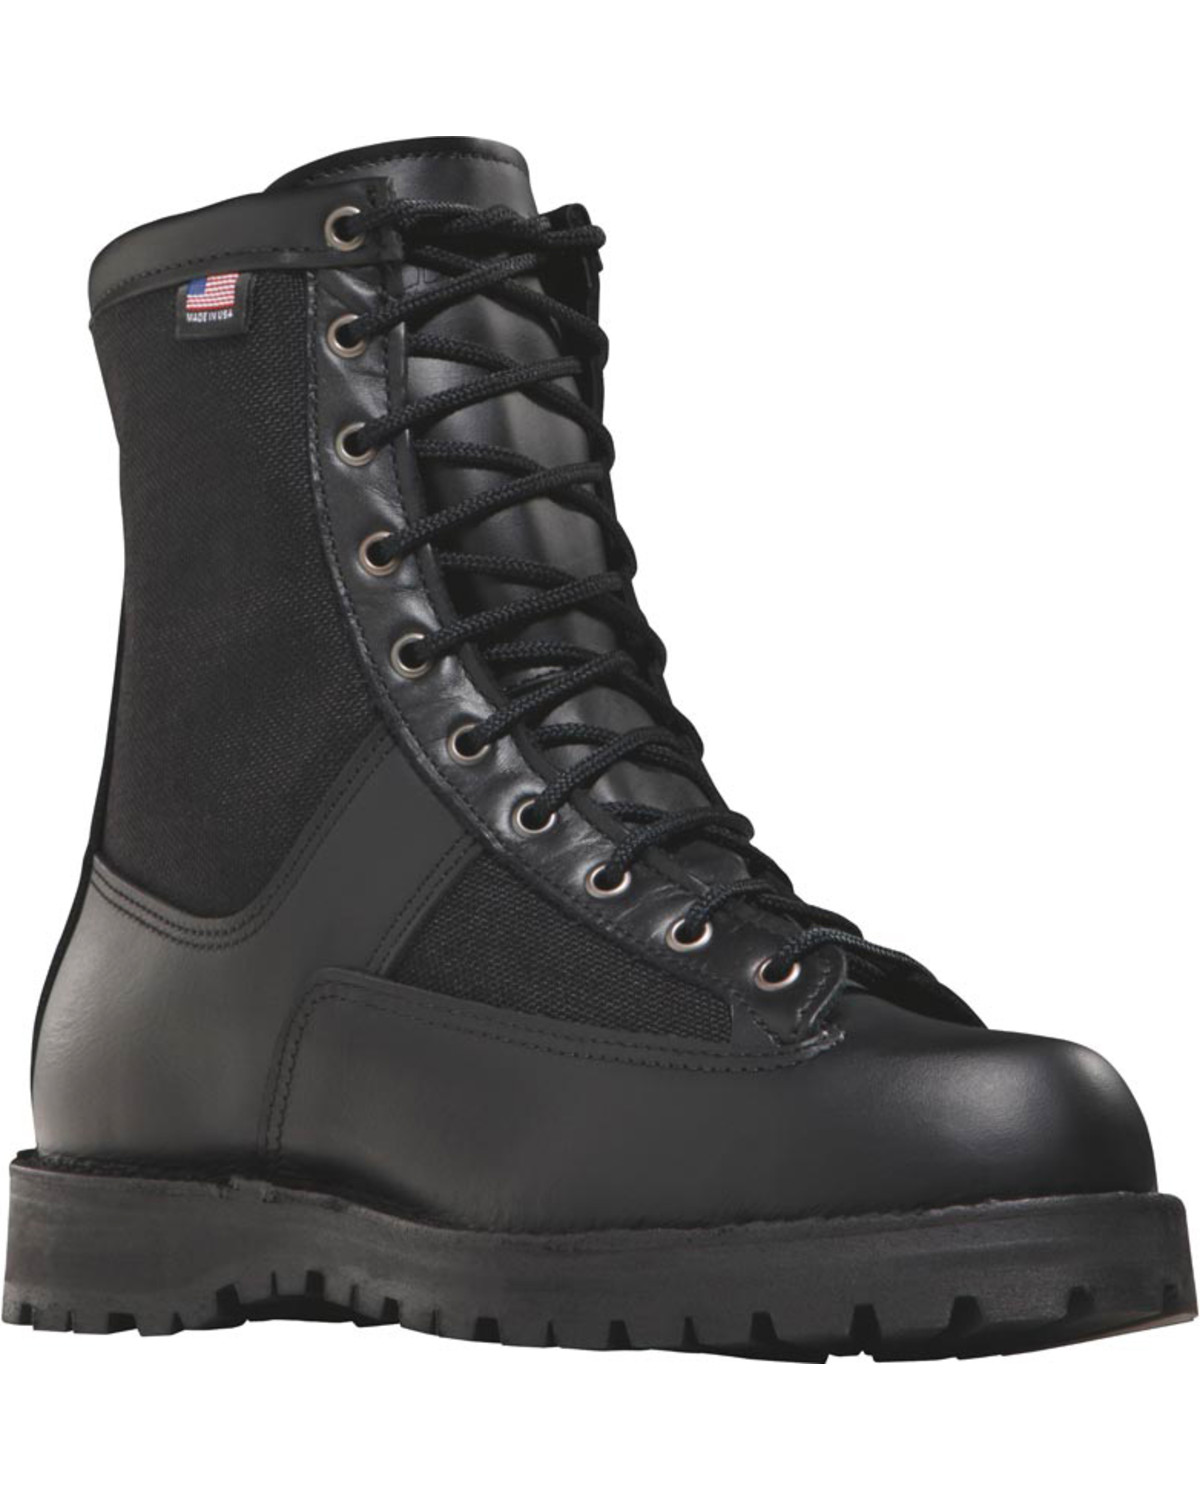 Danner Men's Black Acadia 8"" Uniform Boots - Round Toe